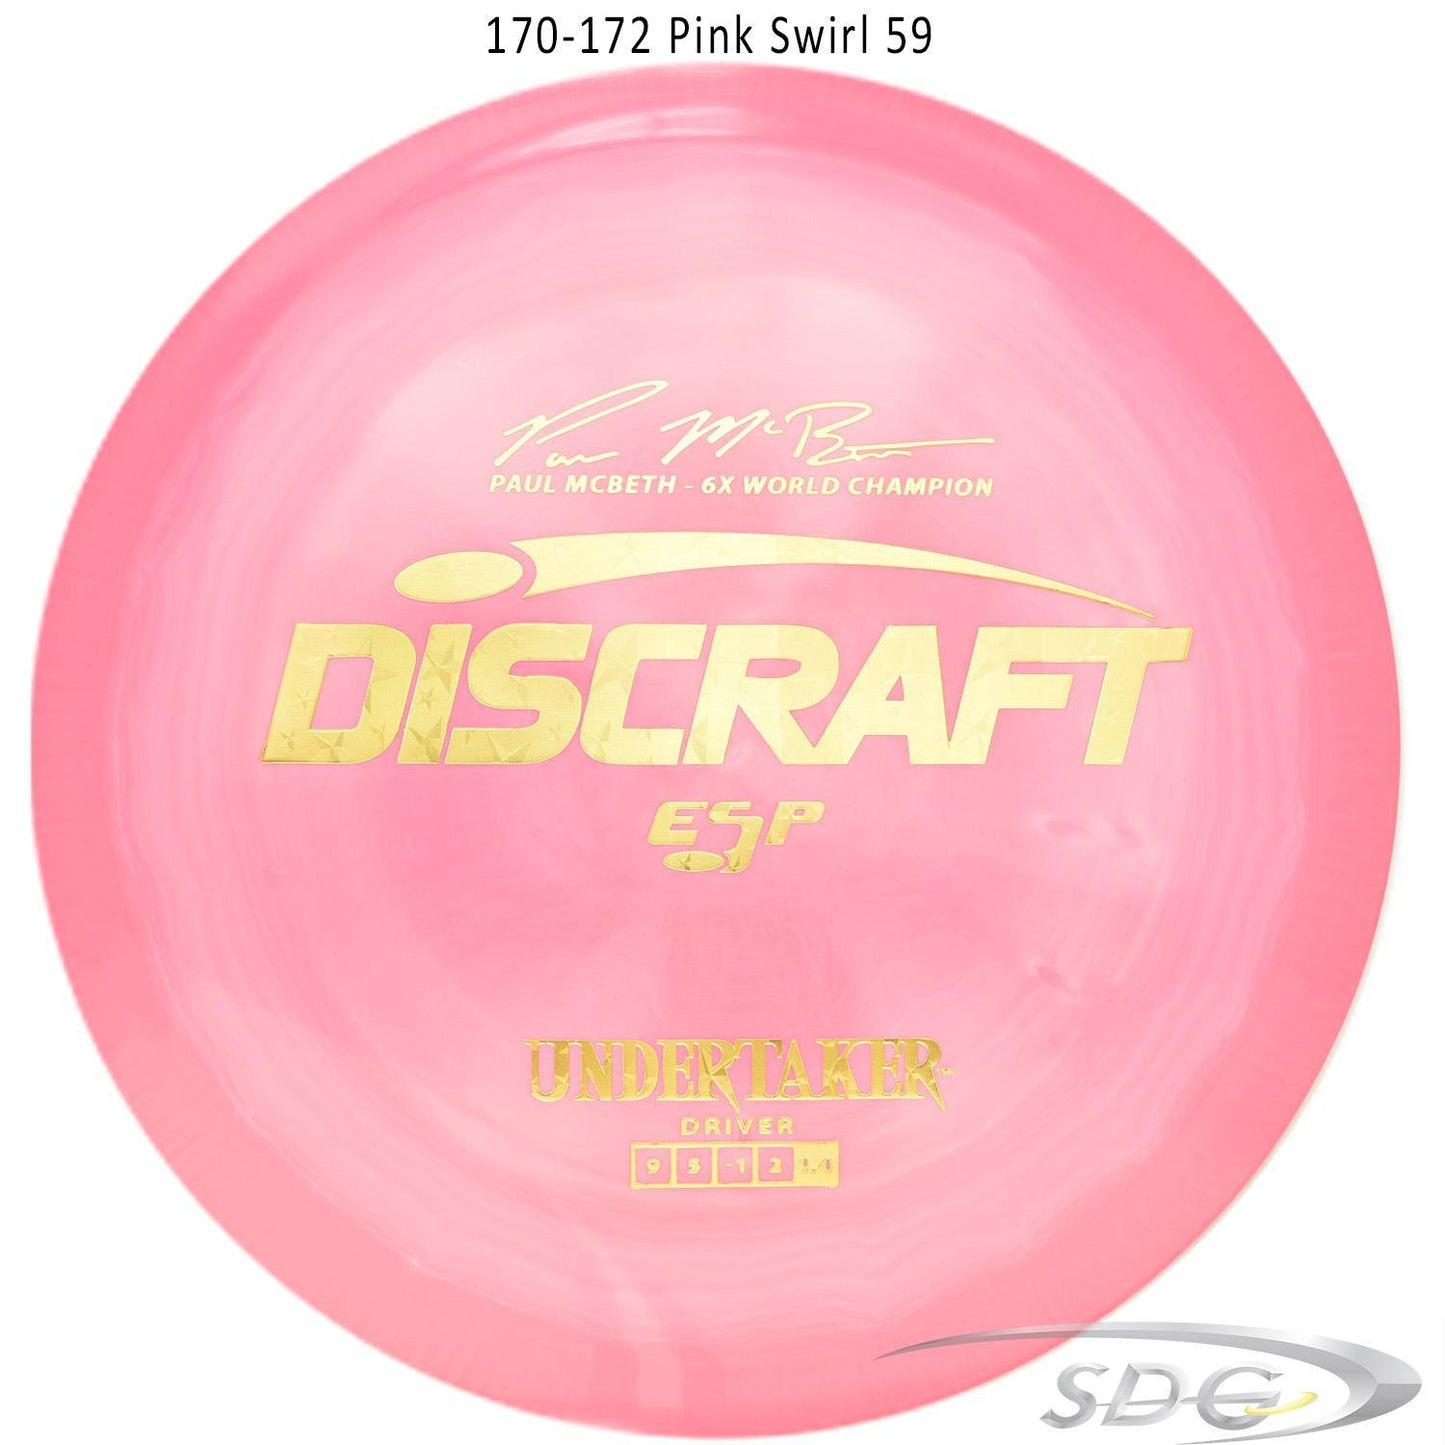 discraft-esp-undertaker-6x-paul-mcbeth-signature-series-disc-golf-distance-driver-172-170-weights 170-172 Pink Siwrl 59 